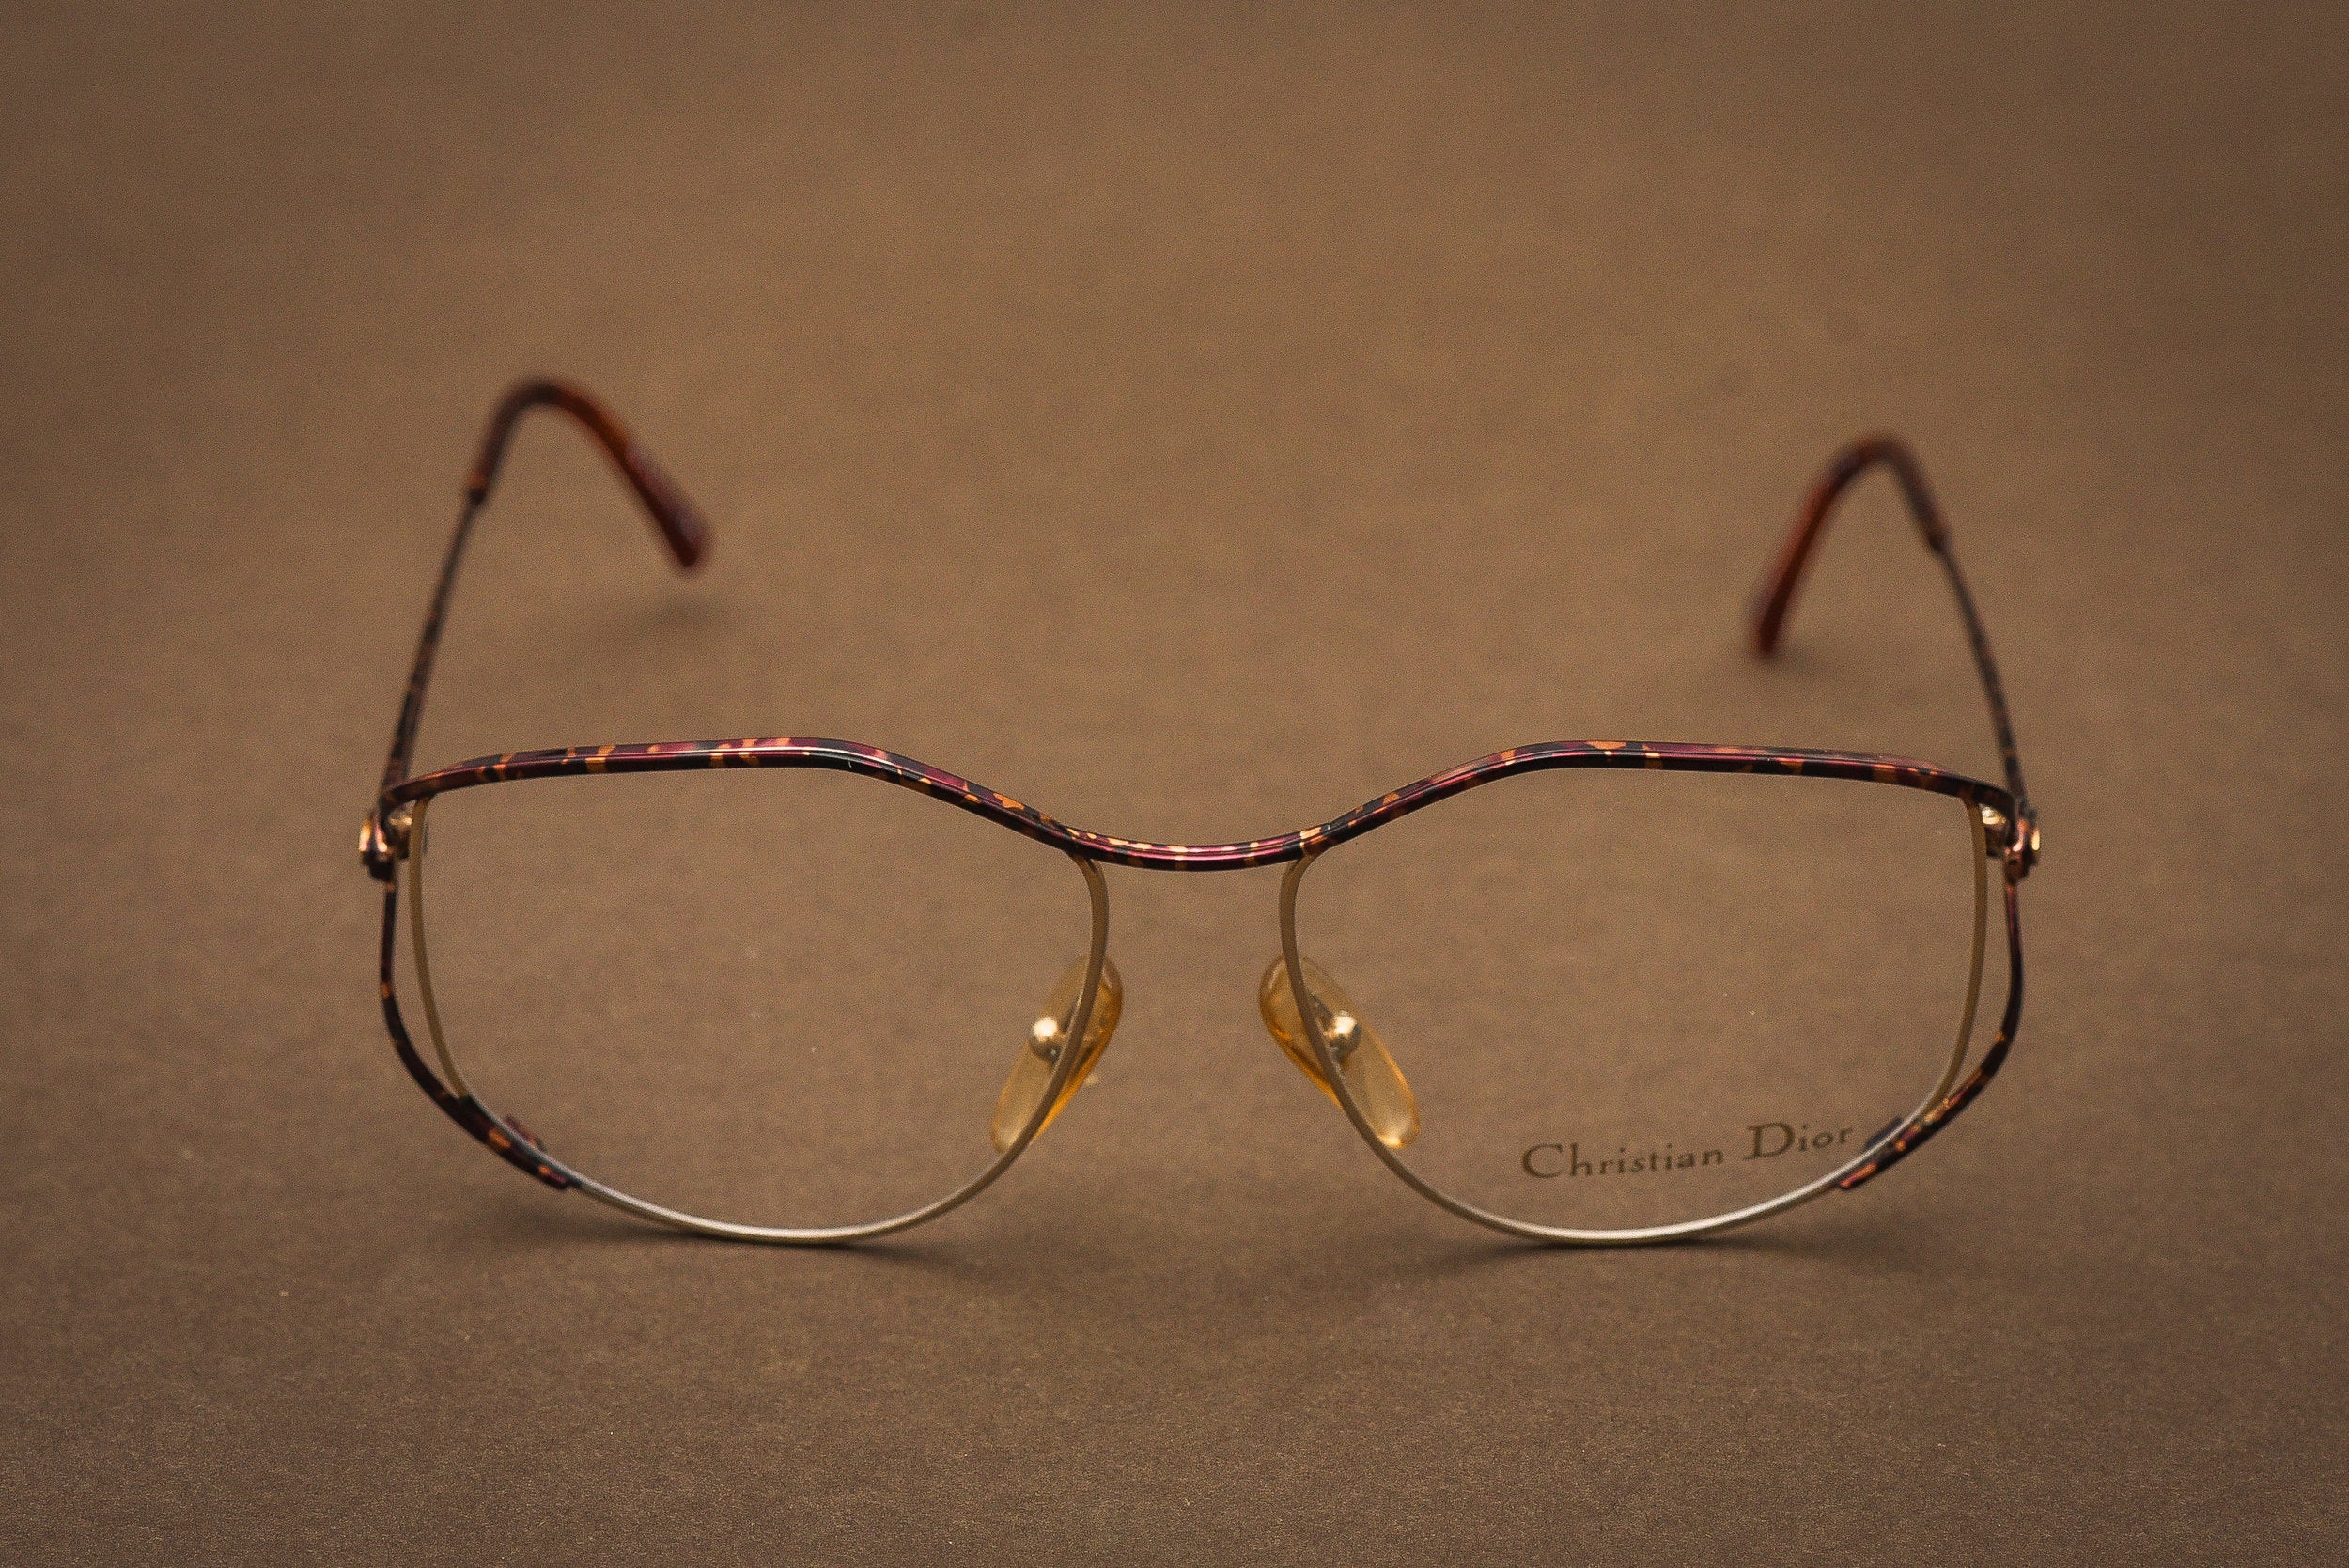 Christian Dior 2525 glasses